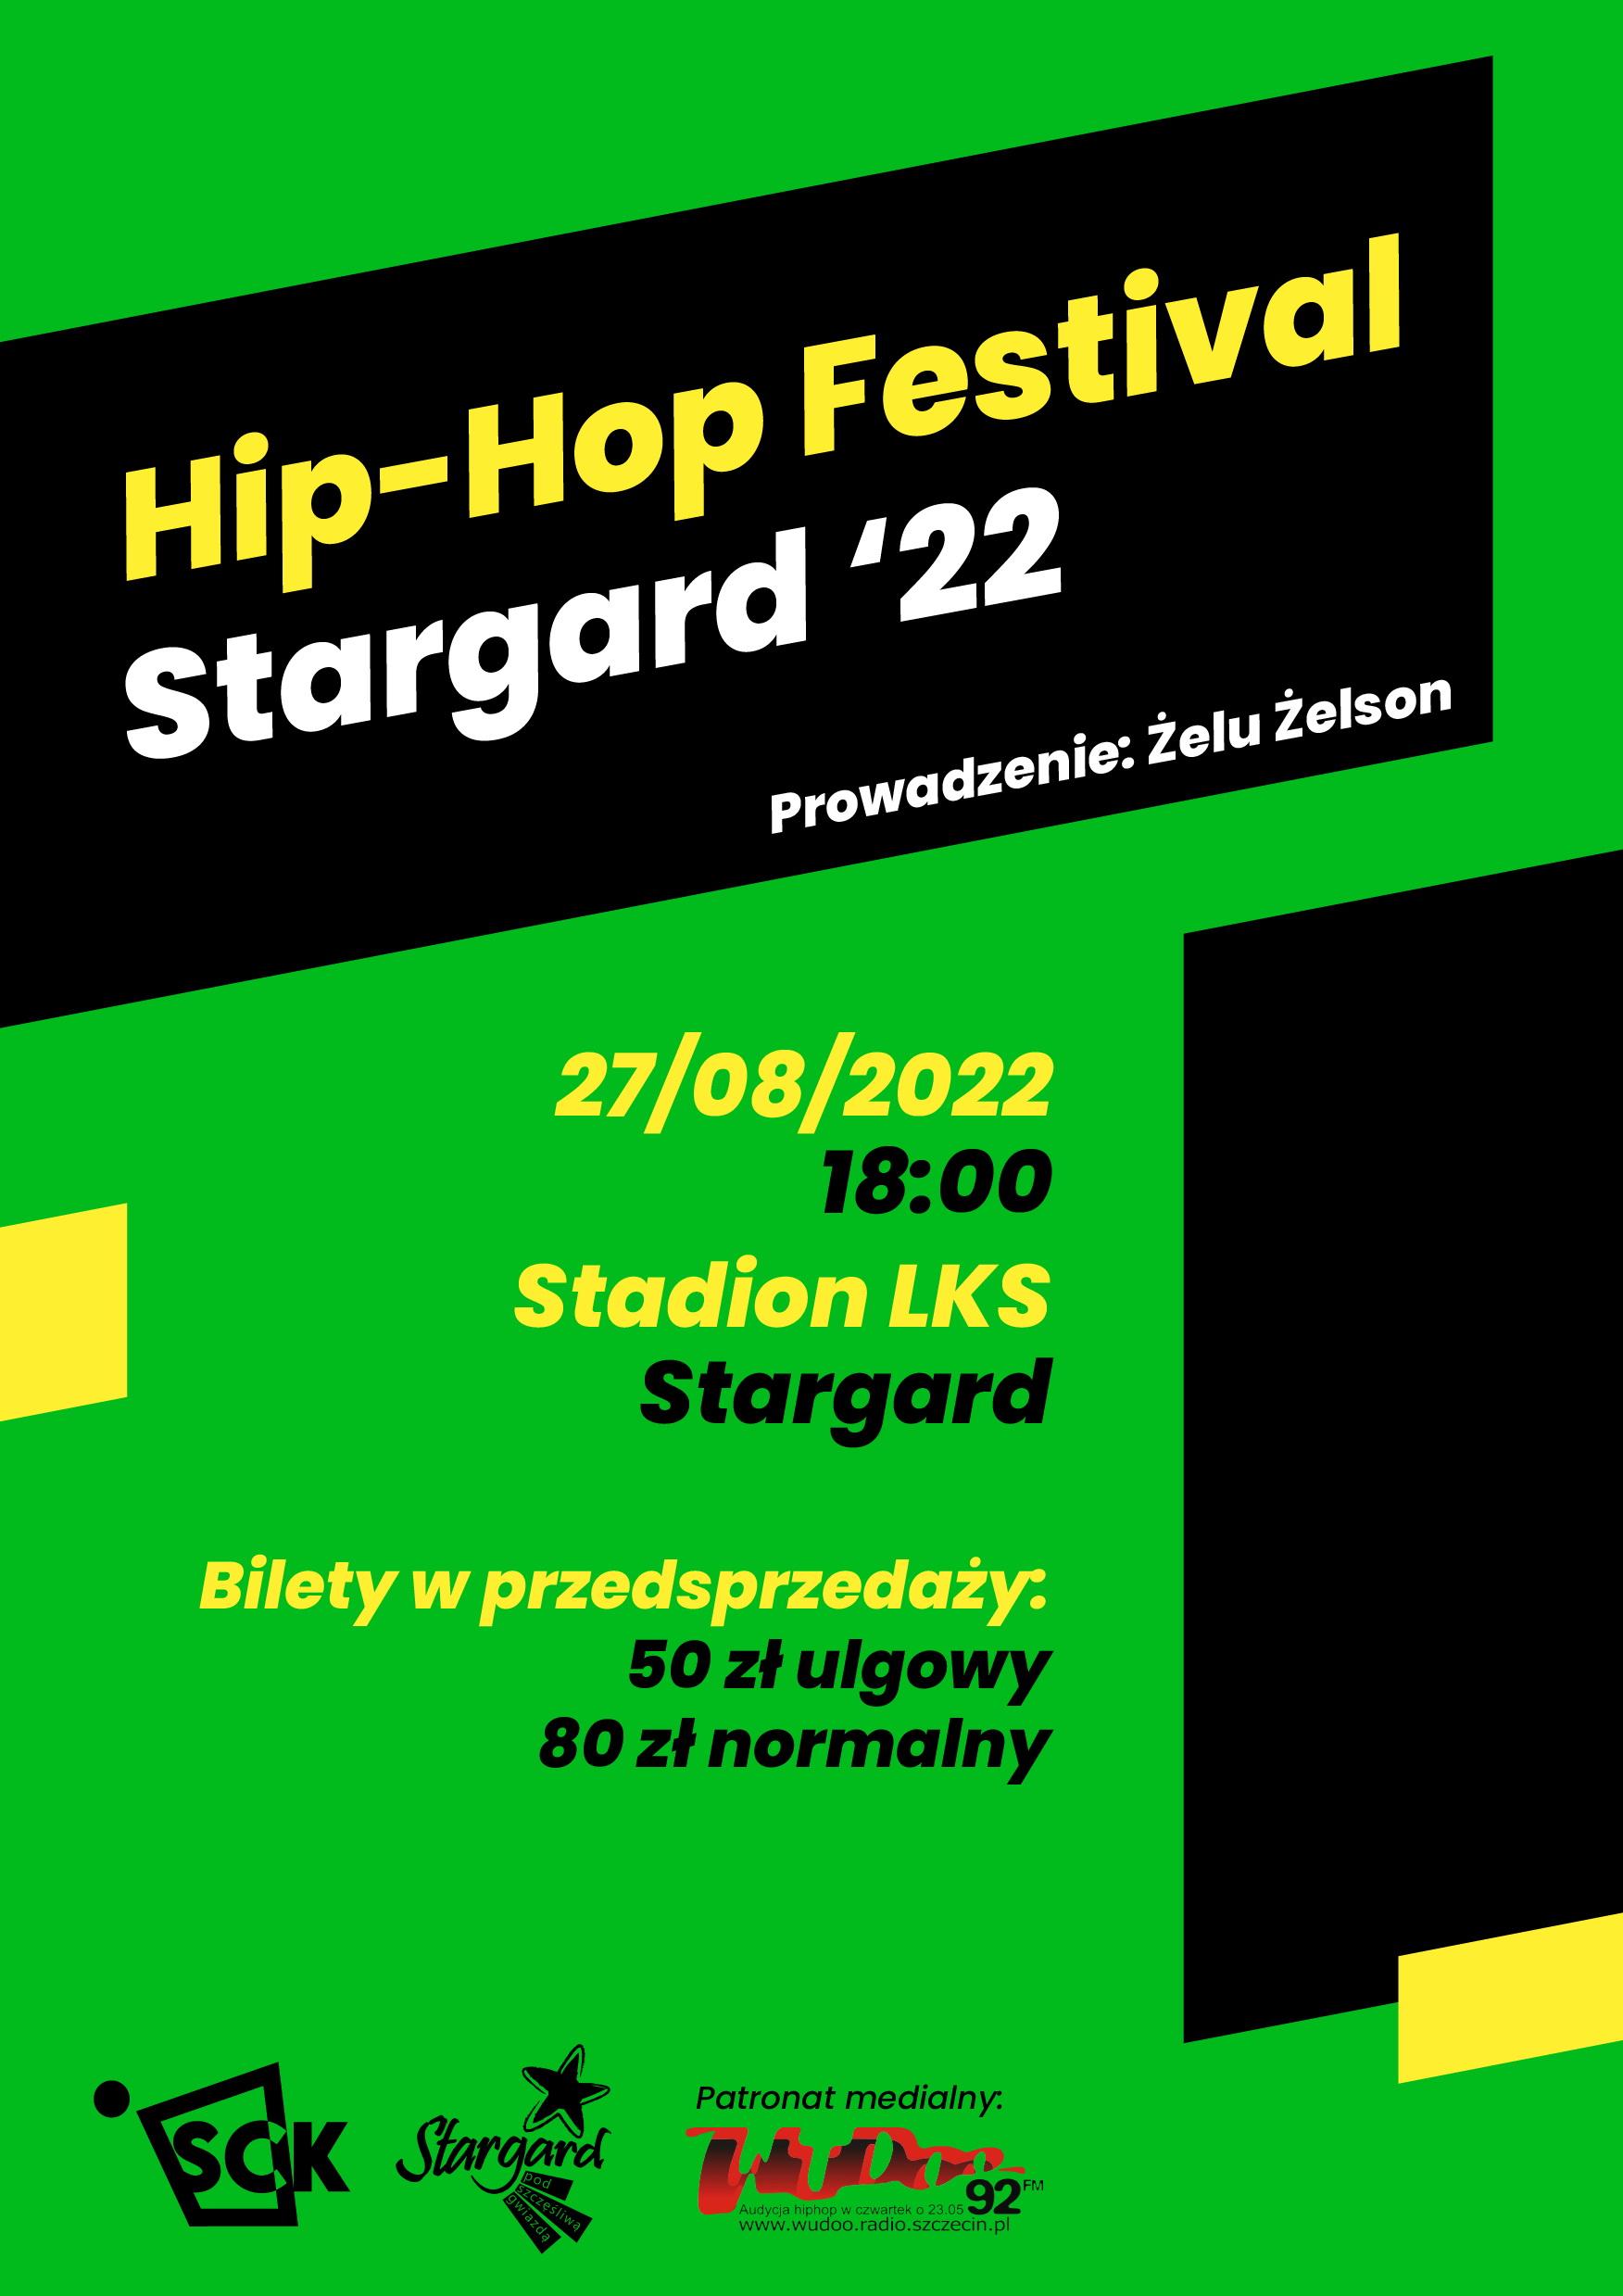 Hip-Hop Festival Stargard 22